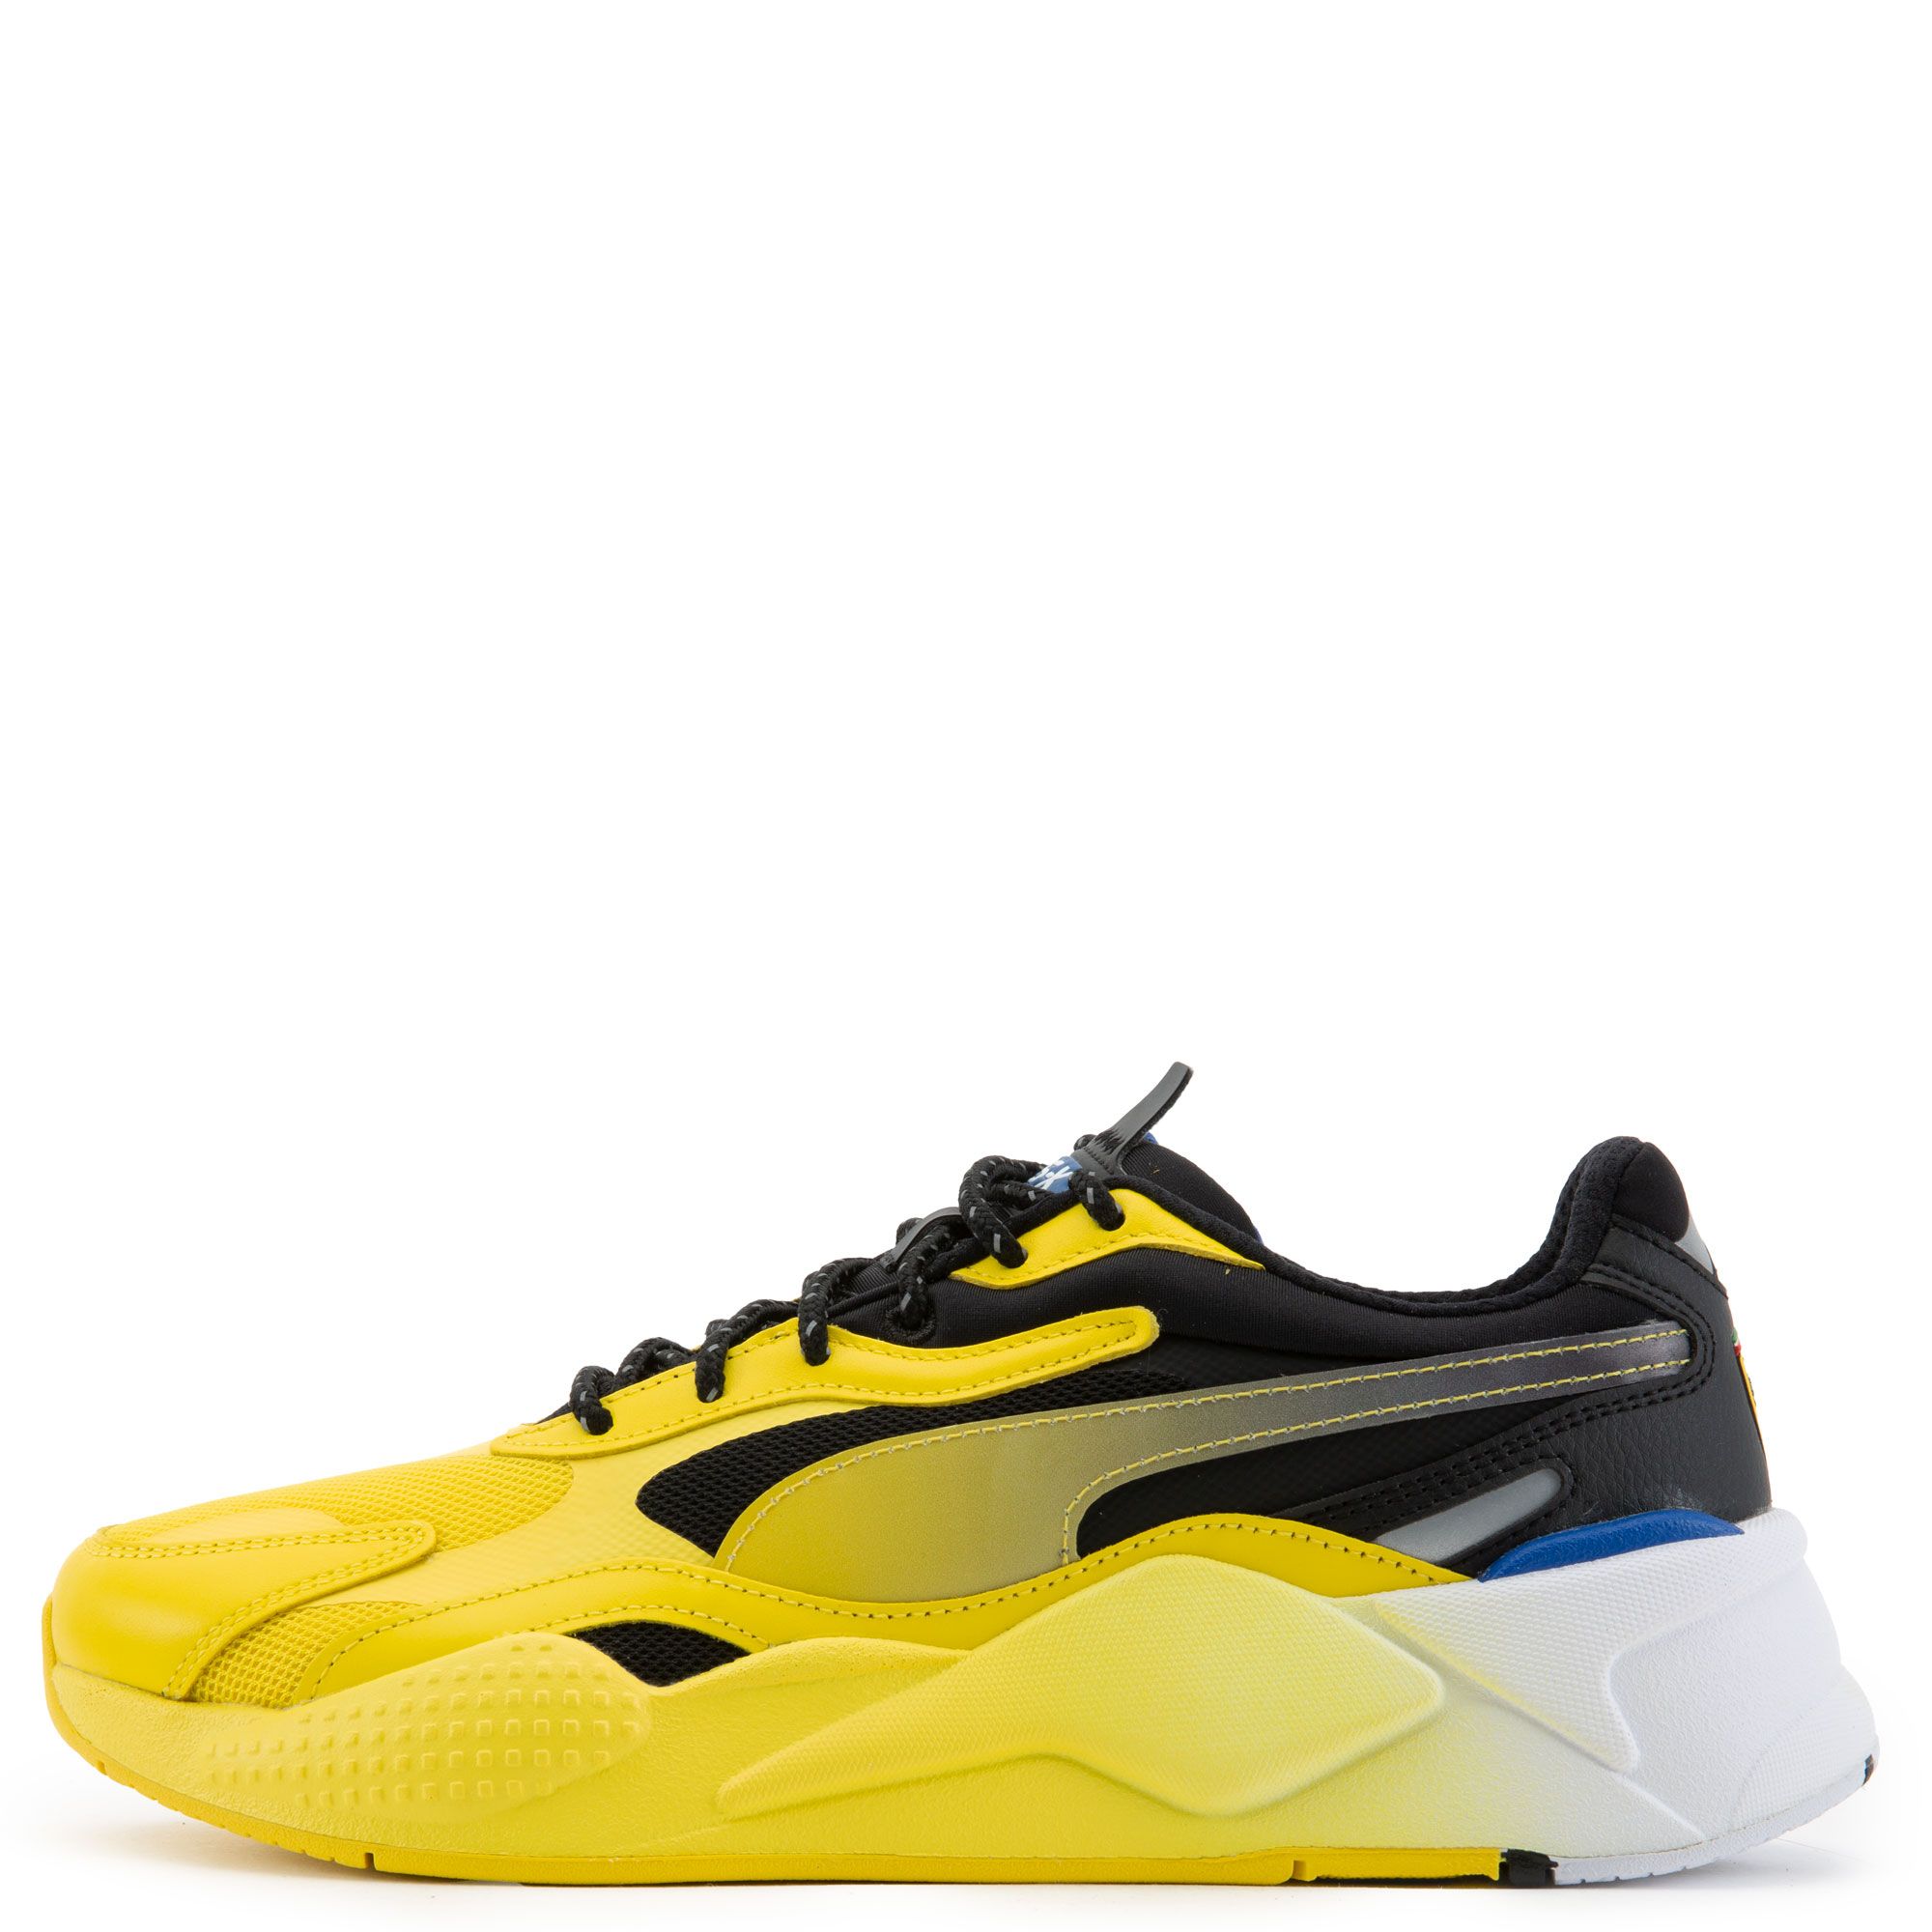 puma yellow ferrari shoes